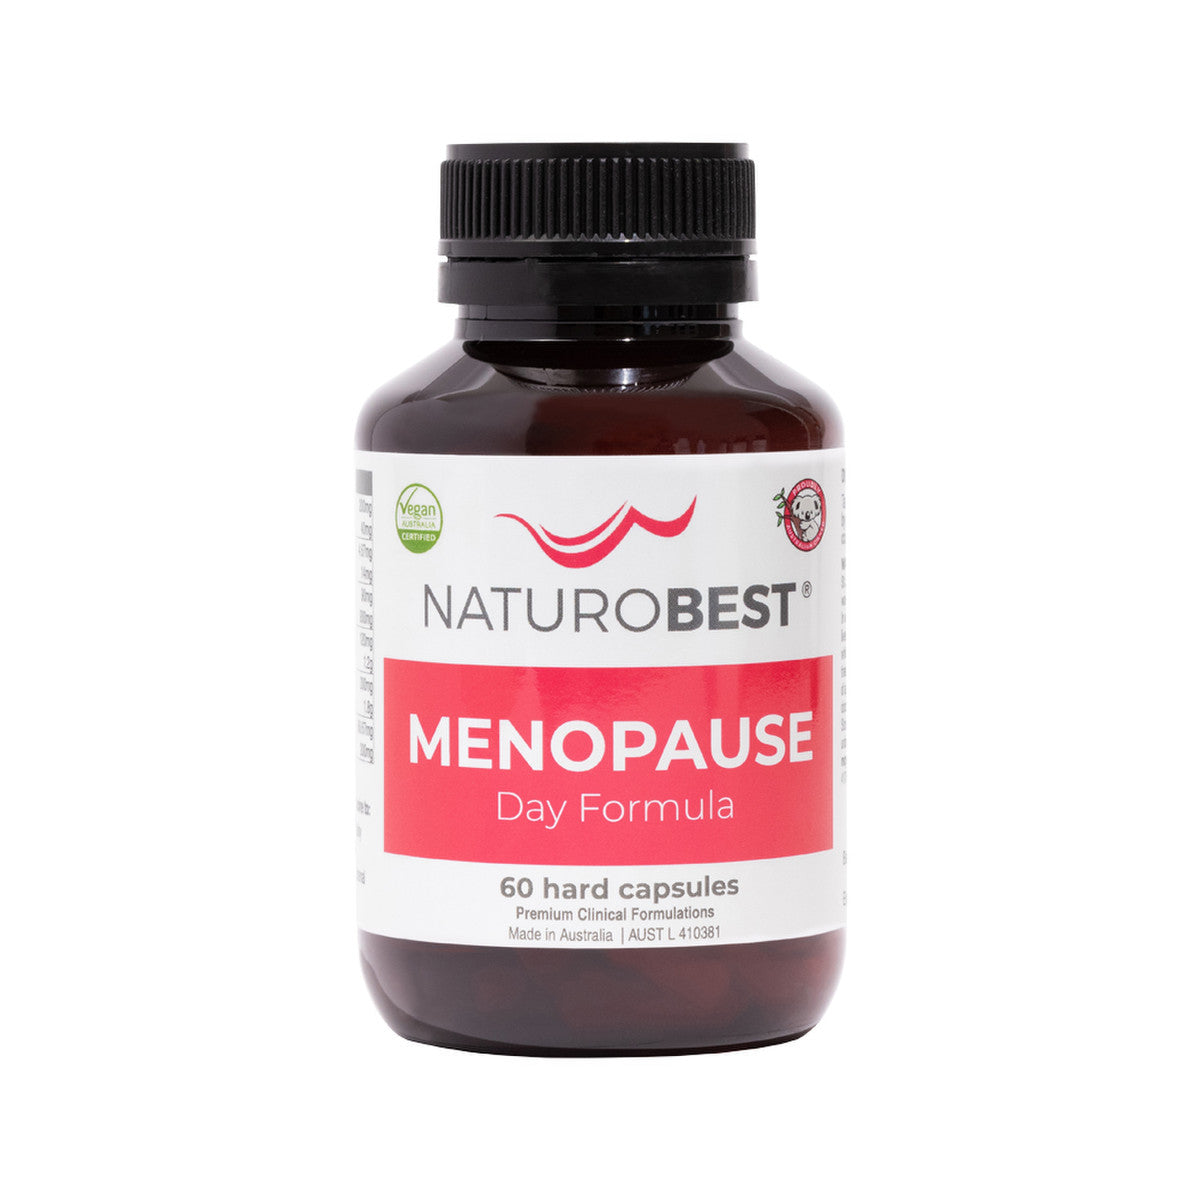 NaturoBest - Menopause Day Formula